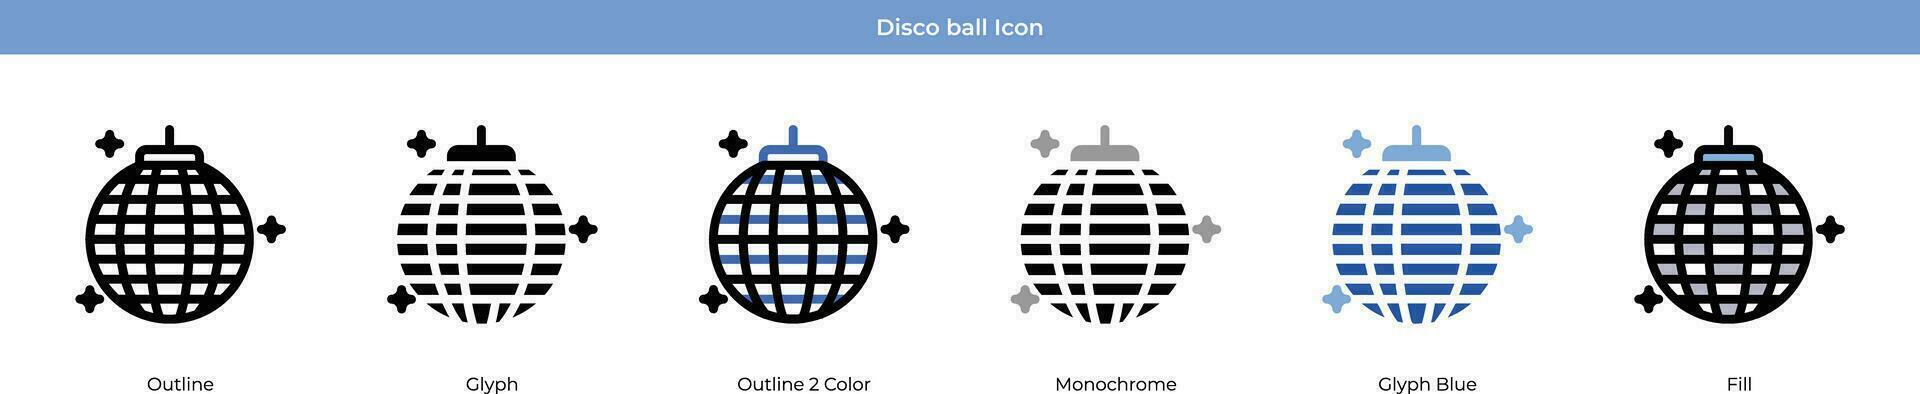 Disco Ball New year Icon Set Vector